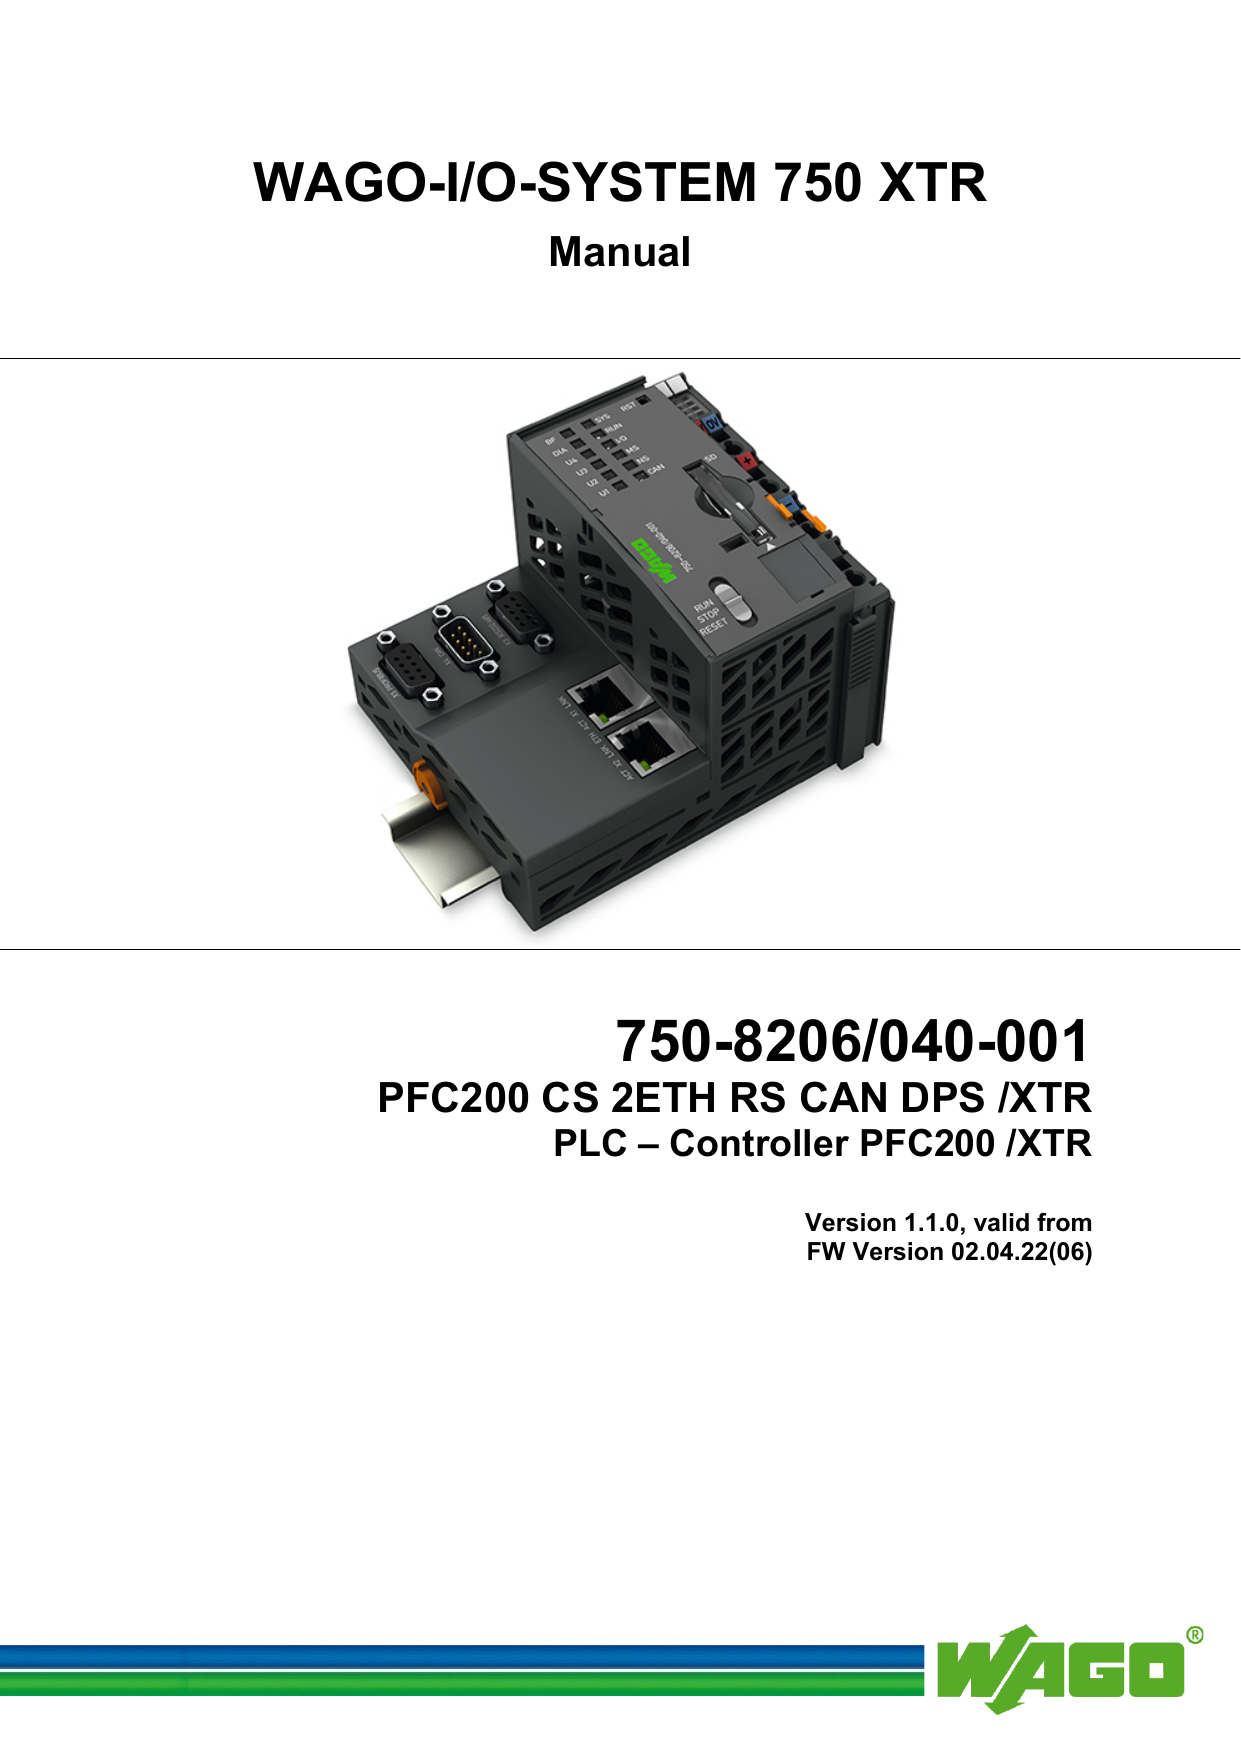 WAGO Incr Enc Interface RS 422 Input 750-631/000-004